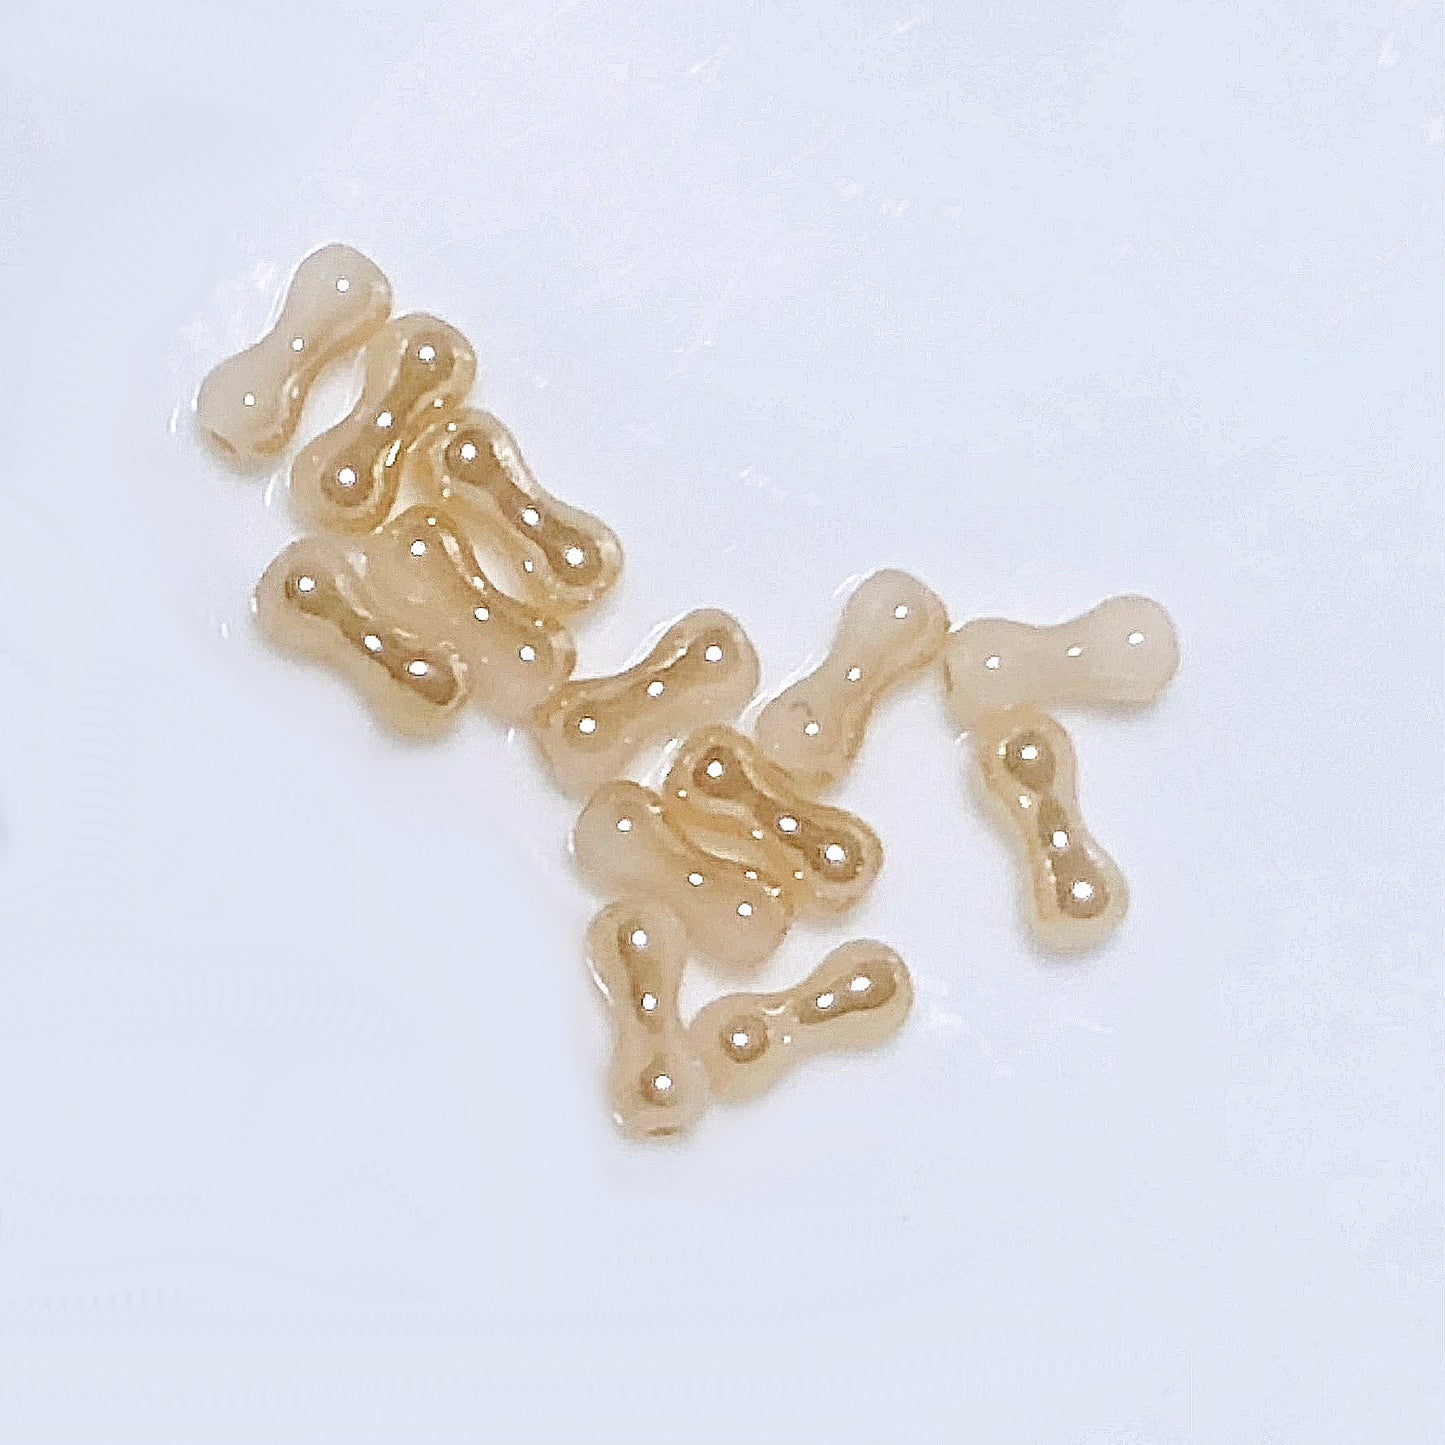 Peanut / Bone Shaped Glass Beads, Beige Gold Luster, 8 x 3 mm - 13 Beads